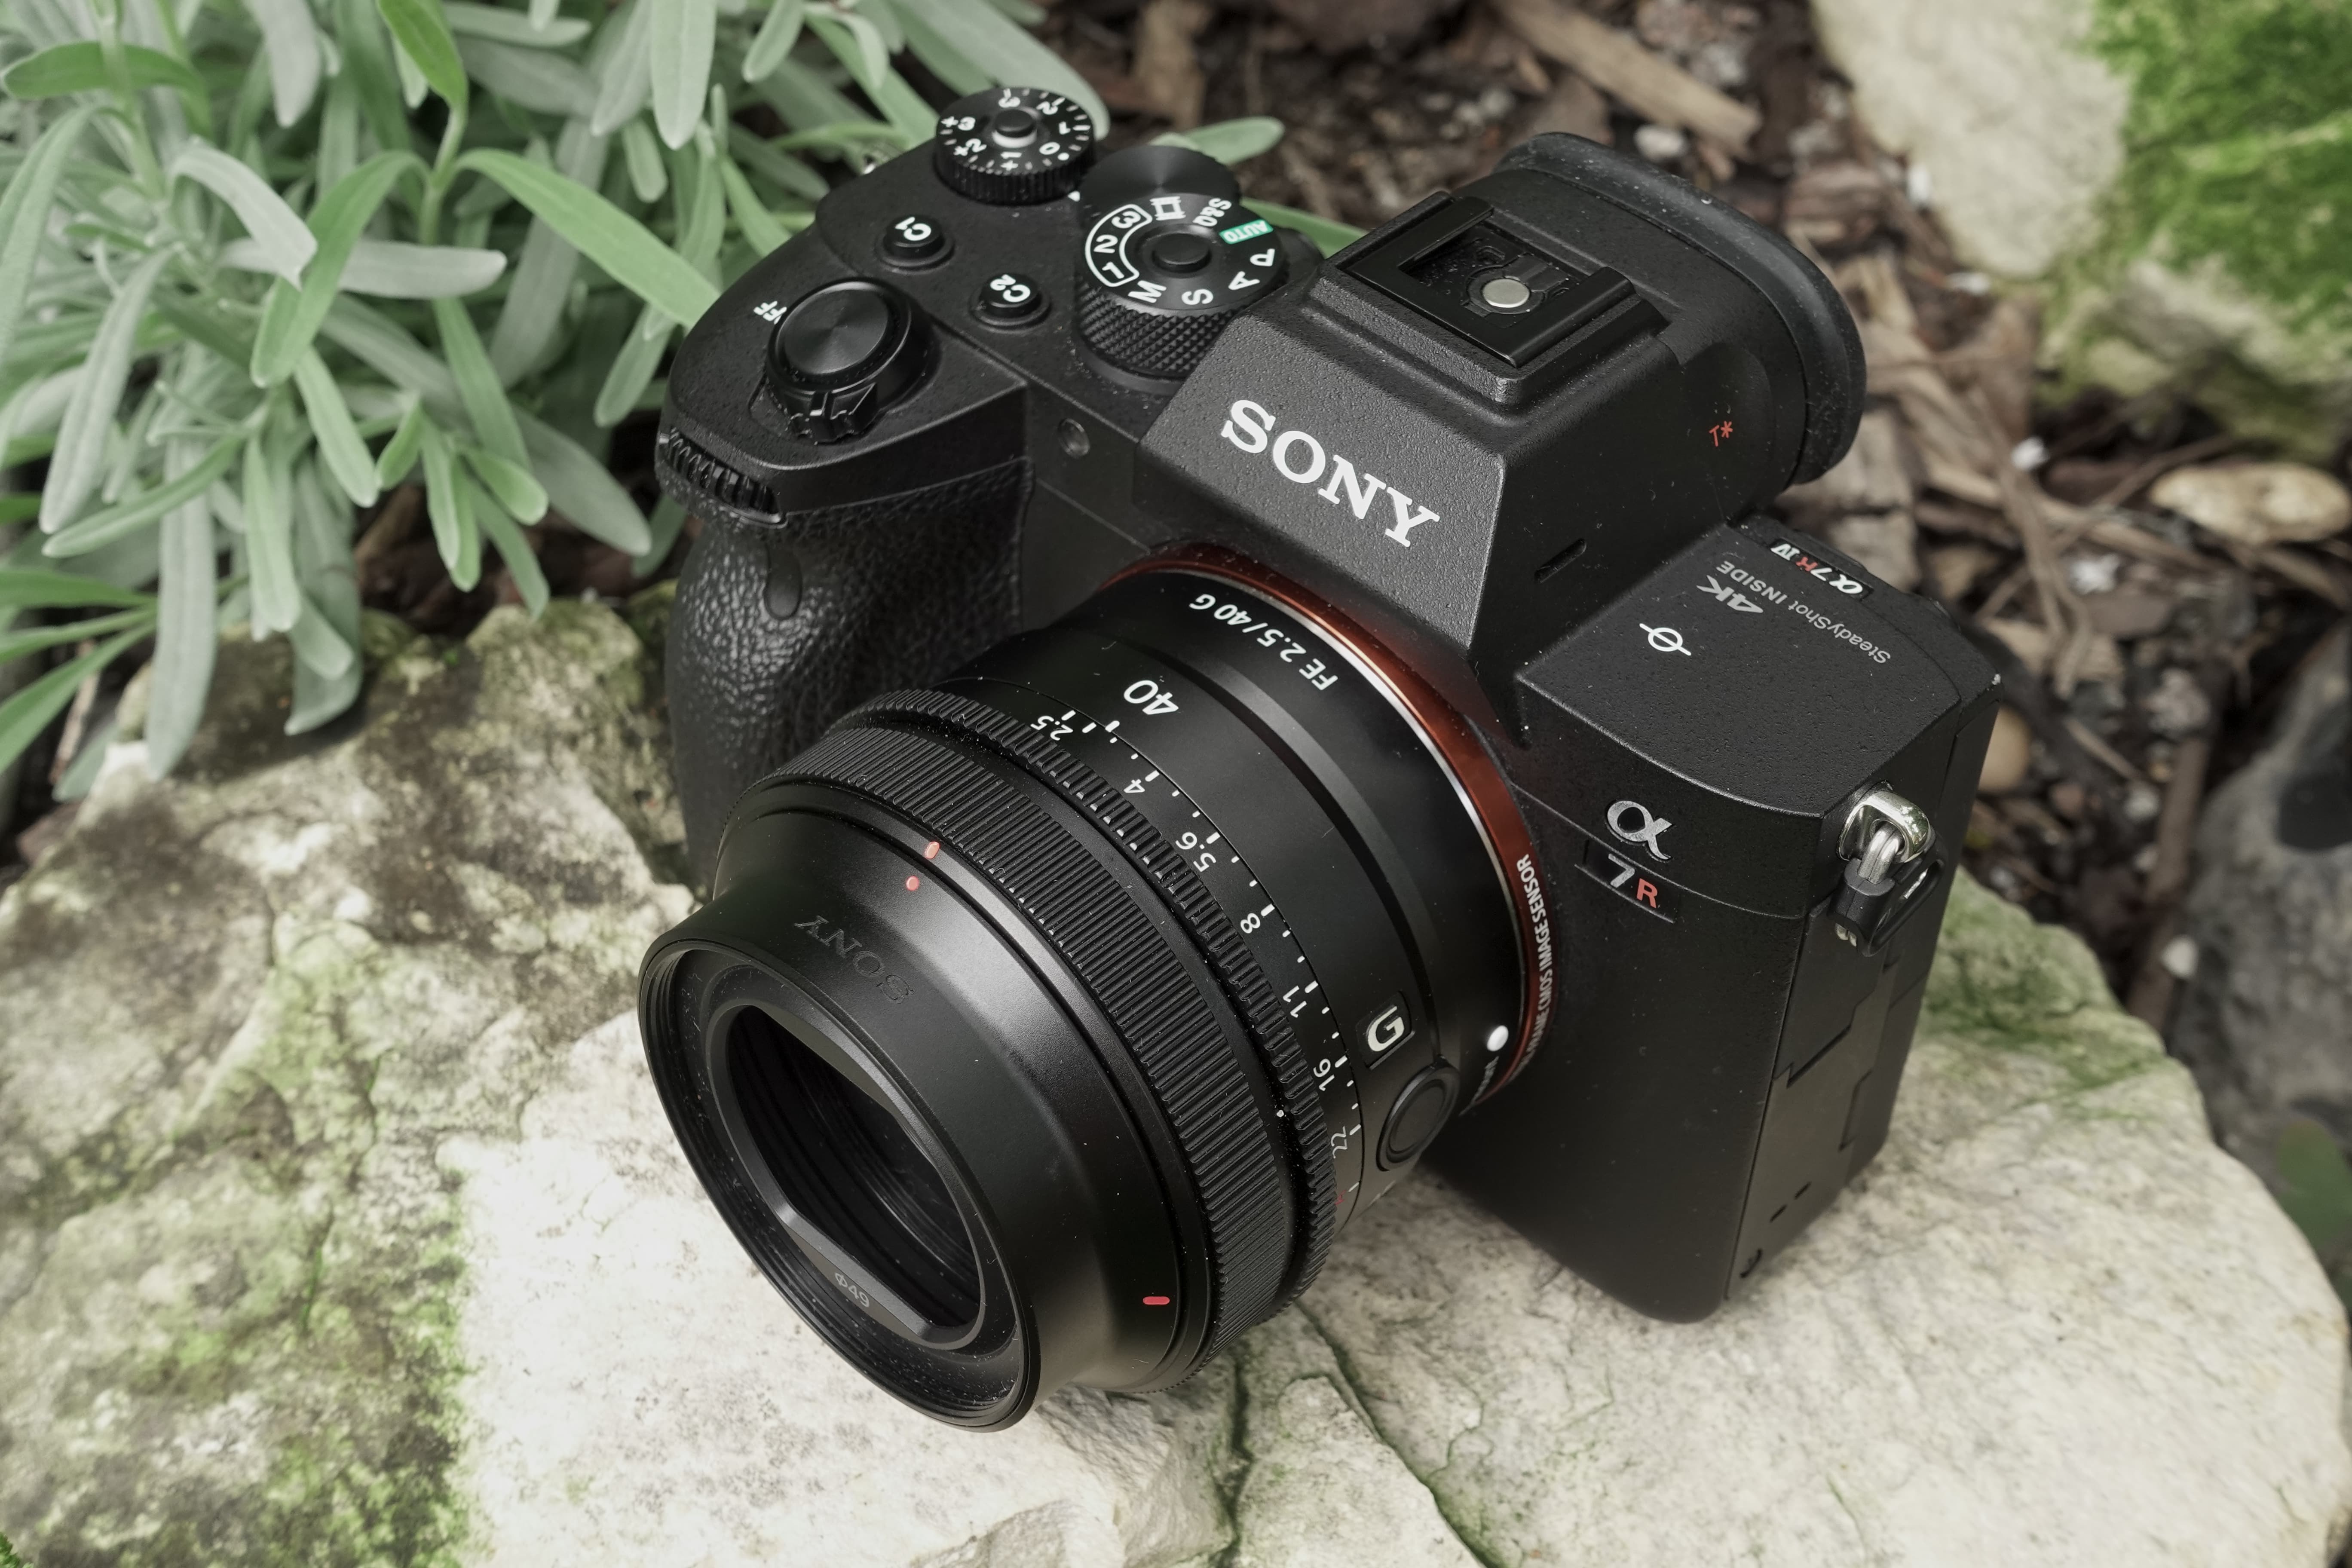 Sony FE 40mm f2.5 G Lens on the Sony A7R IV.